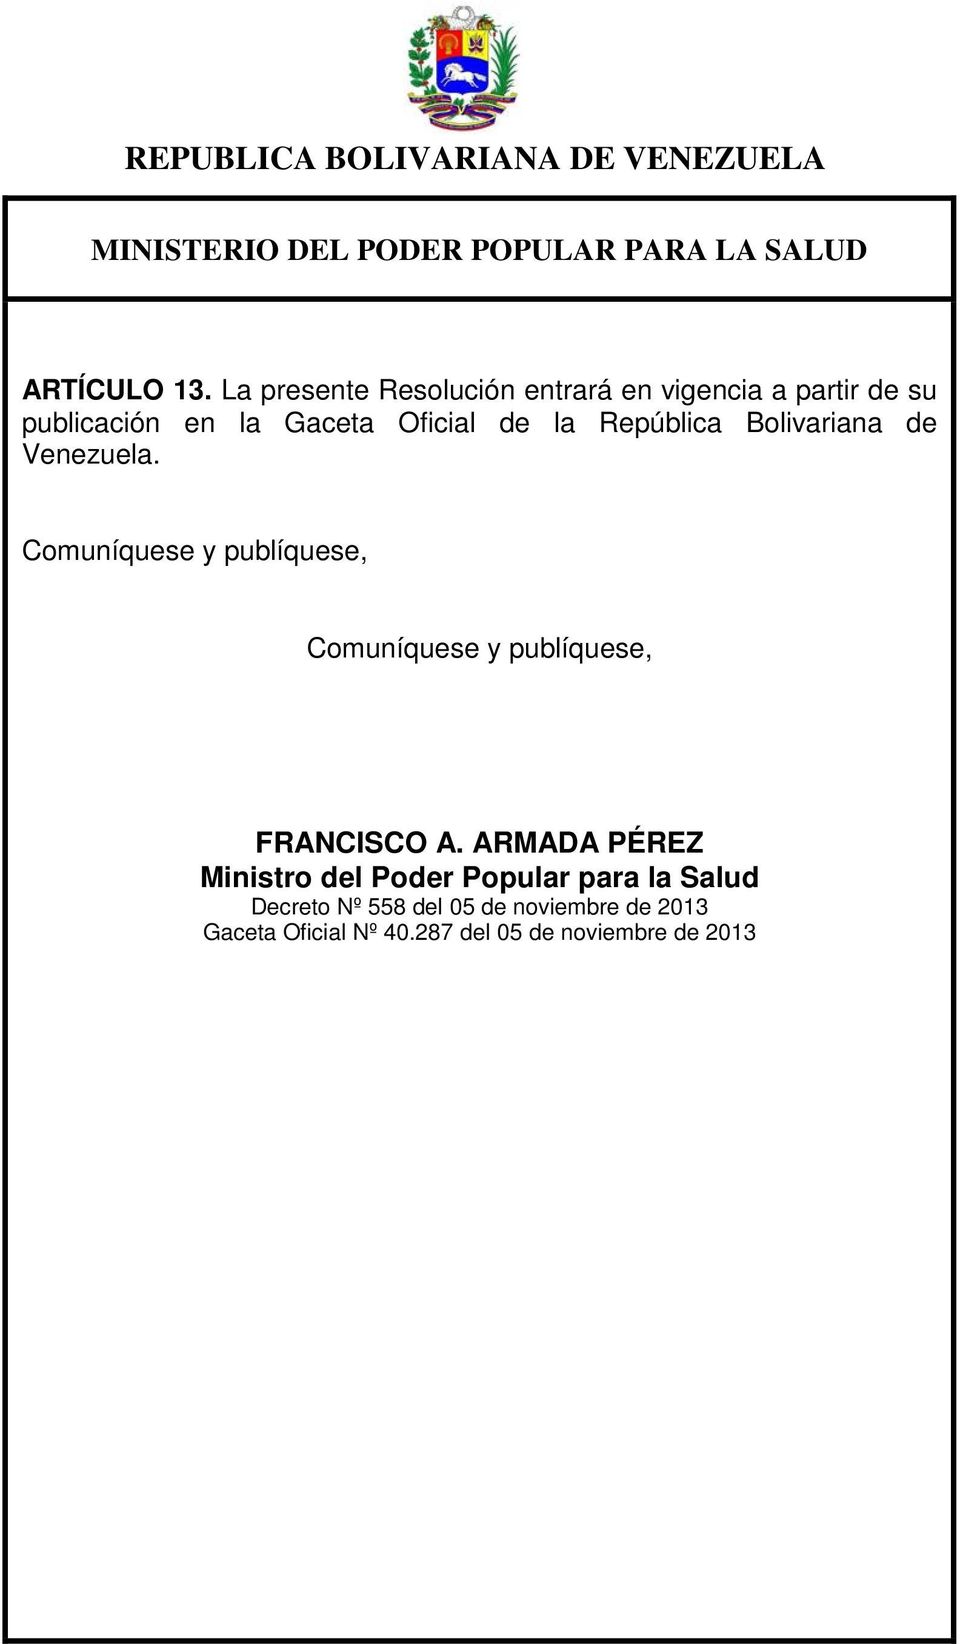 Oficial de la República Bolivariana de Venezuela.